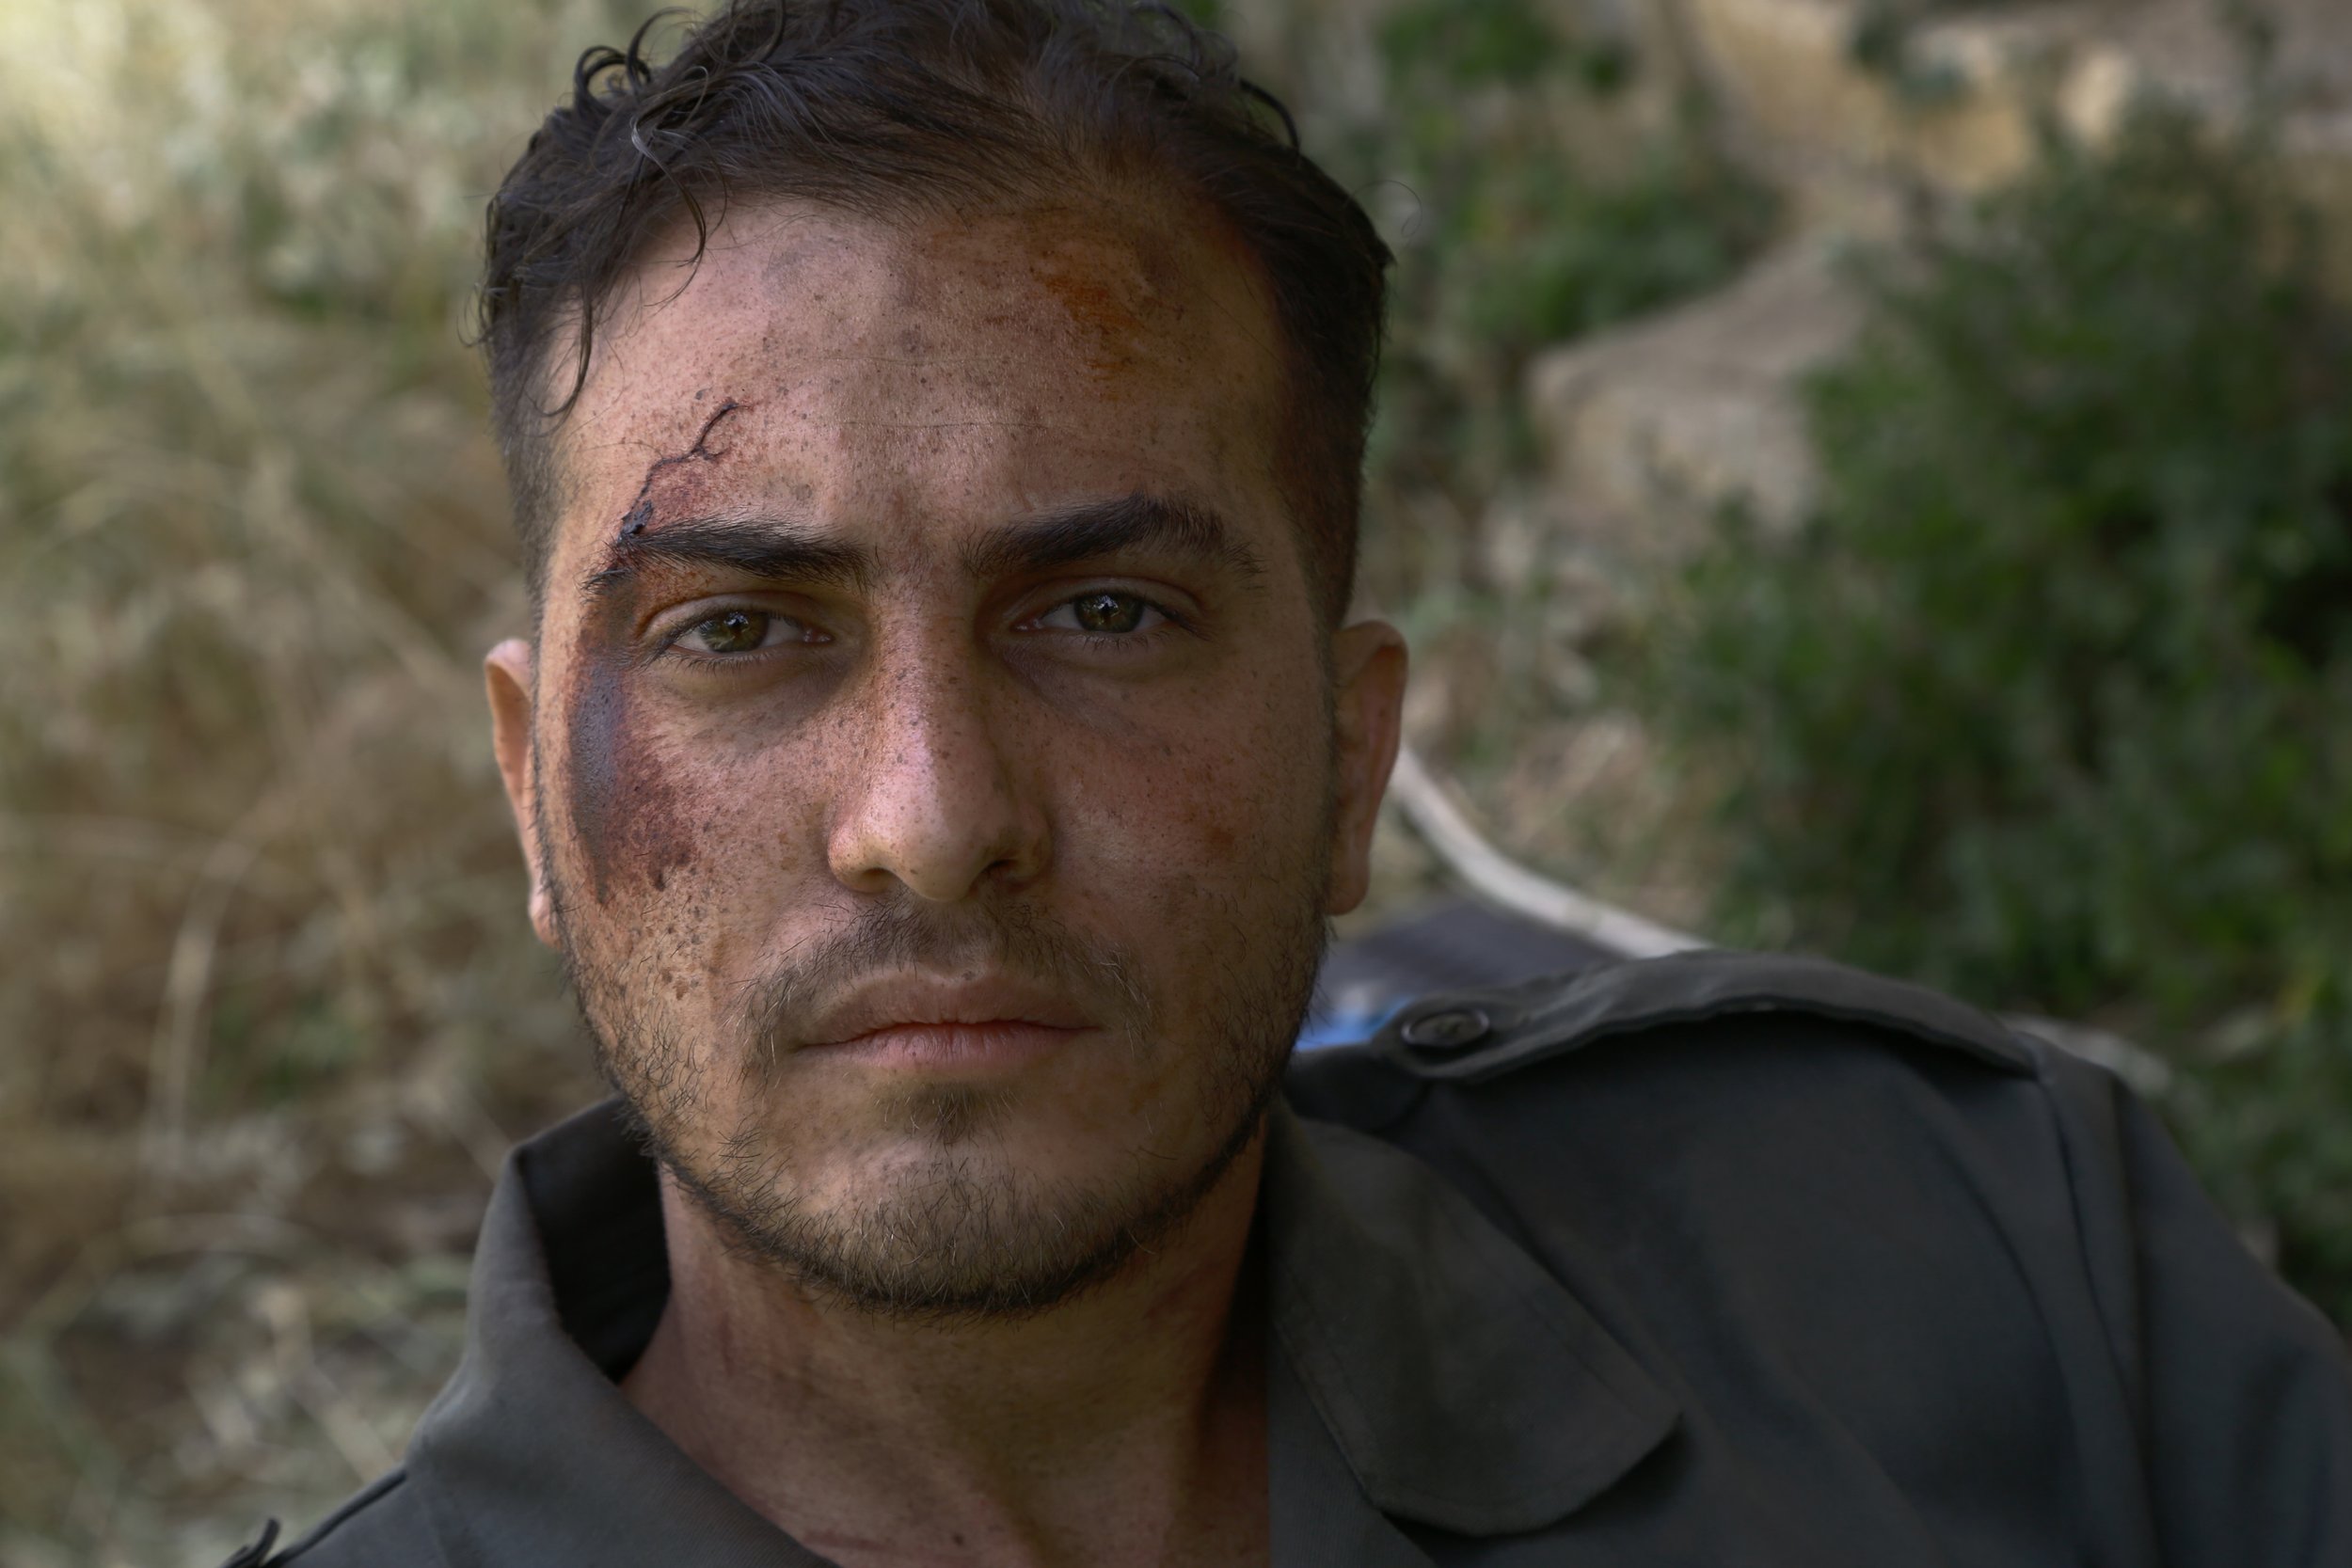 rony_yucef_youssef_sfx_artistic_silicon_prosthetics_makeup_artist_Photography_actor_editorial_dubai_kuwait_lebanon_uae_ksa_spain_uk_la_bodyart_art_war_film_production_wound_scar_skinartist_soldiers_patina.jpeg